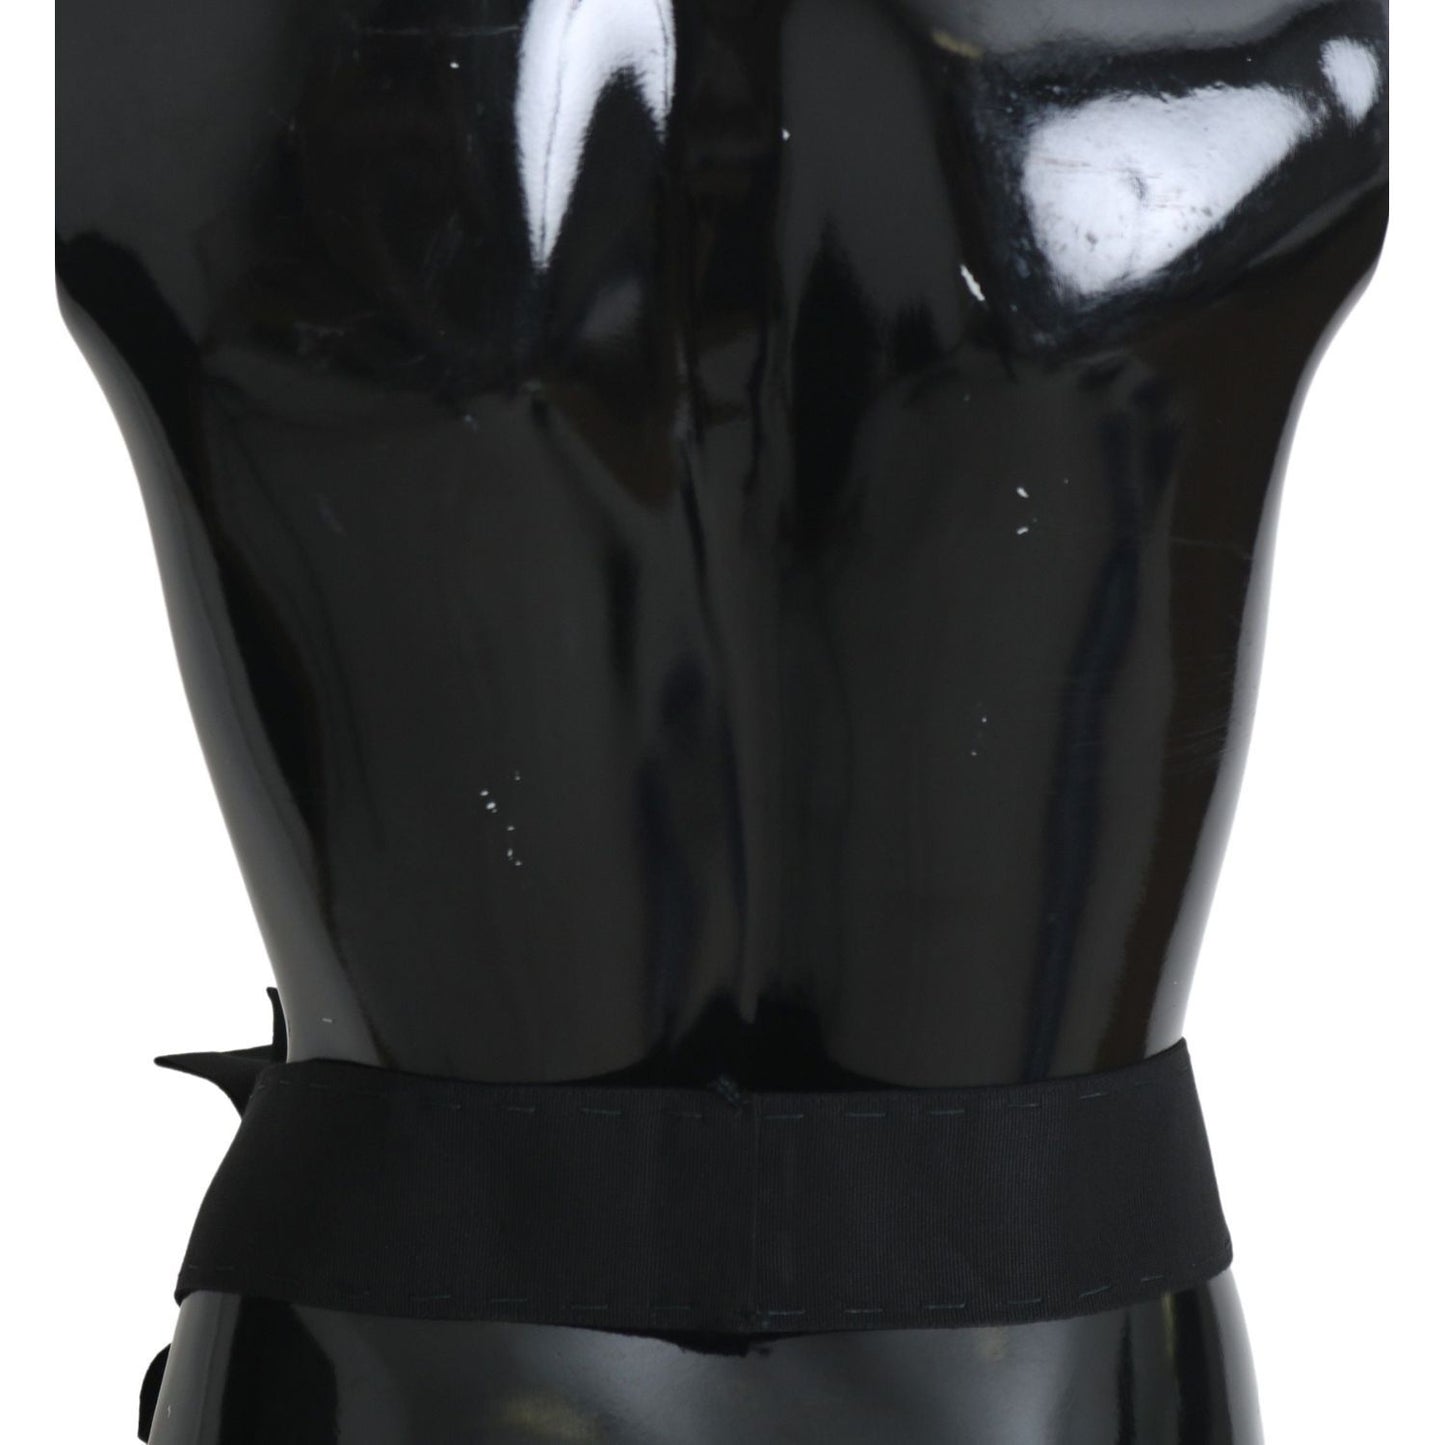 Dolce & Gabbana Elegant Black Crystal Waist Belt black-crystal-brooch-wide-wai-satoria-belt